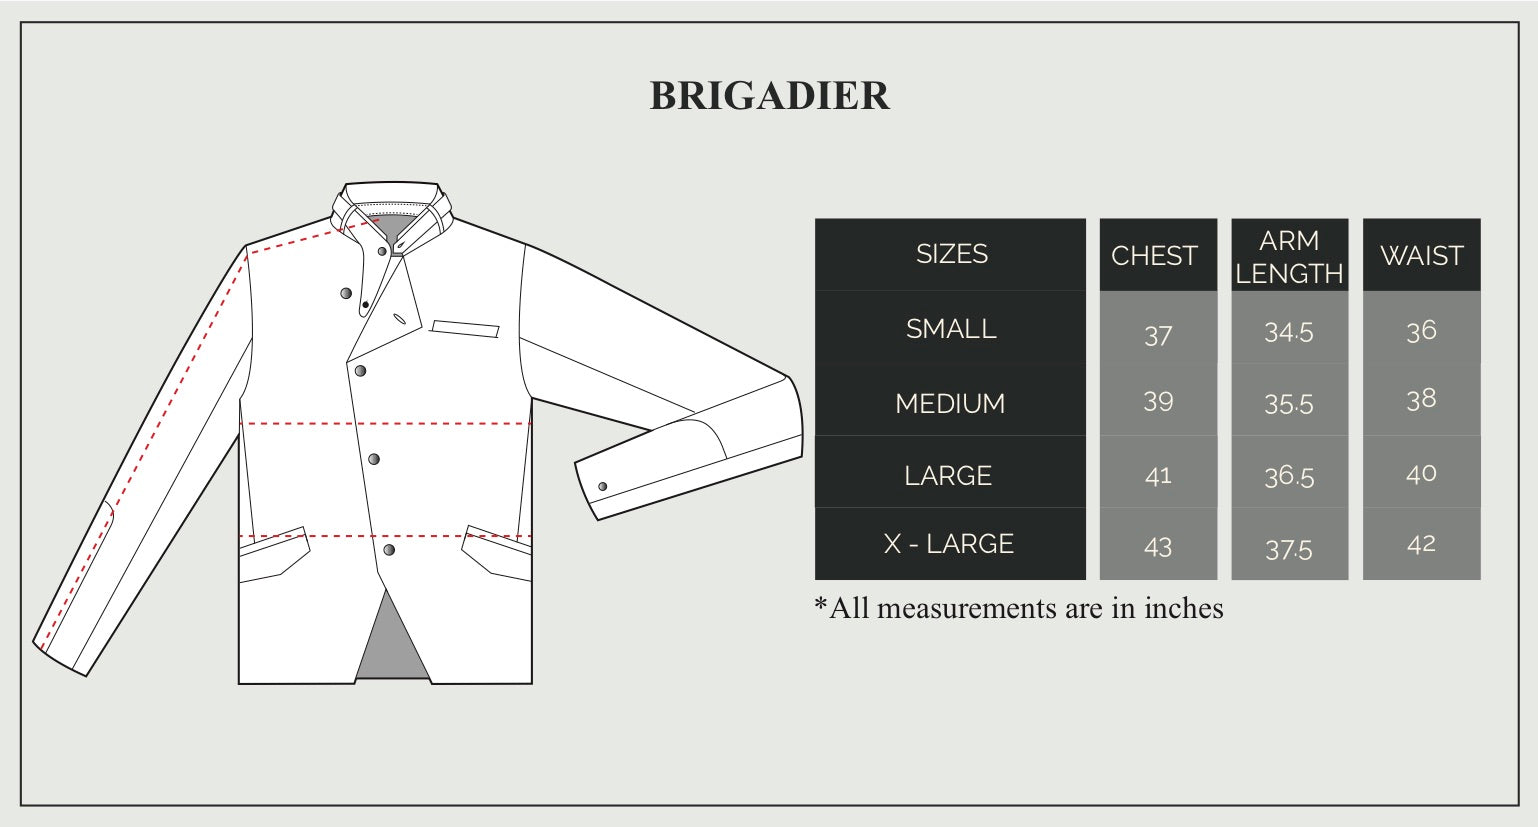 Brigadier Size Guide